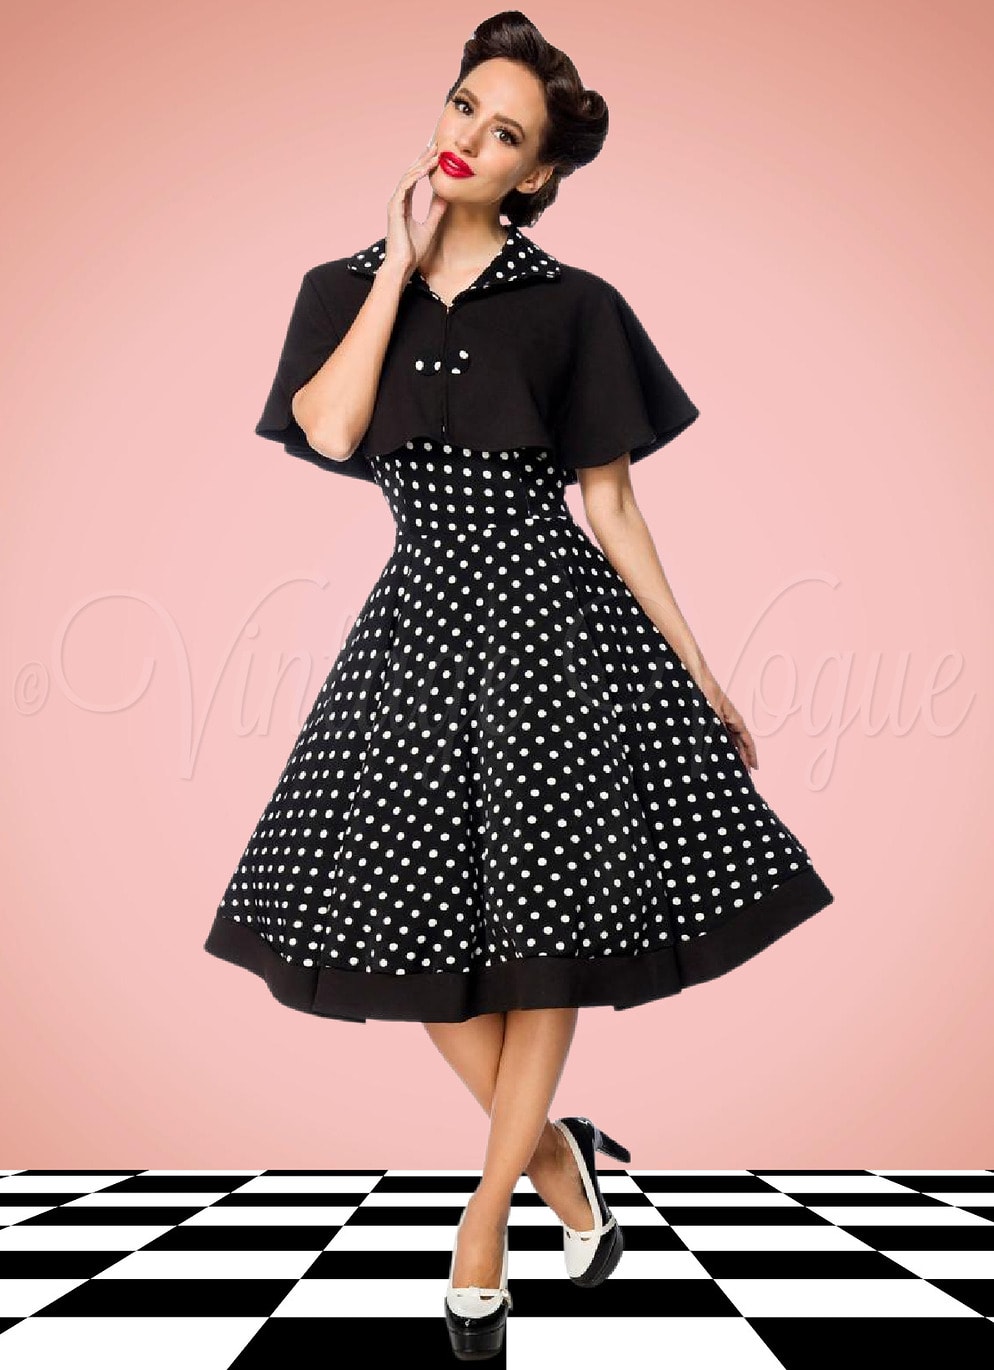 Belsira 50's Retro Vintage Swing Kleid mit Polka Dots Punkte Cape in Schwarz Weiß Petticoat Damen Damenkleid Punkte gepunktet tupfen Jive Lindy Hop Mottoparty Rock n Roll